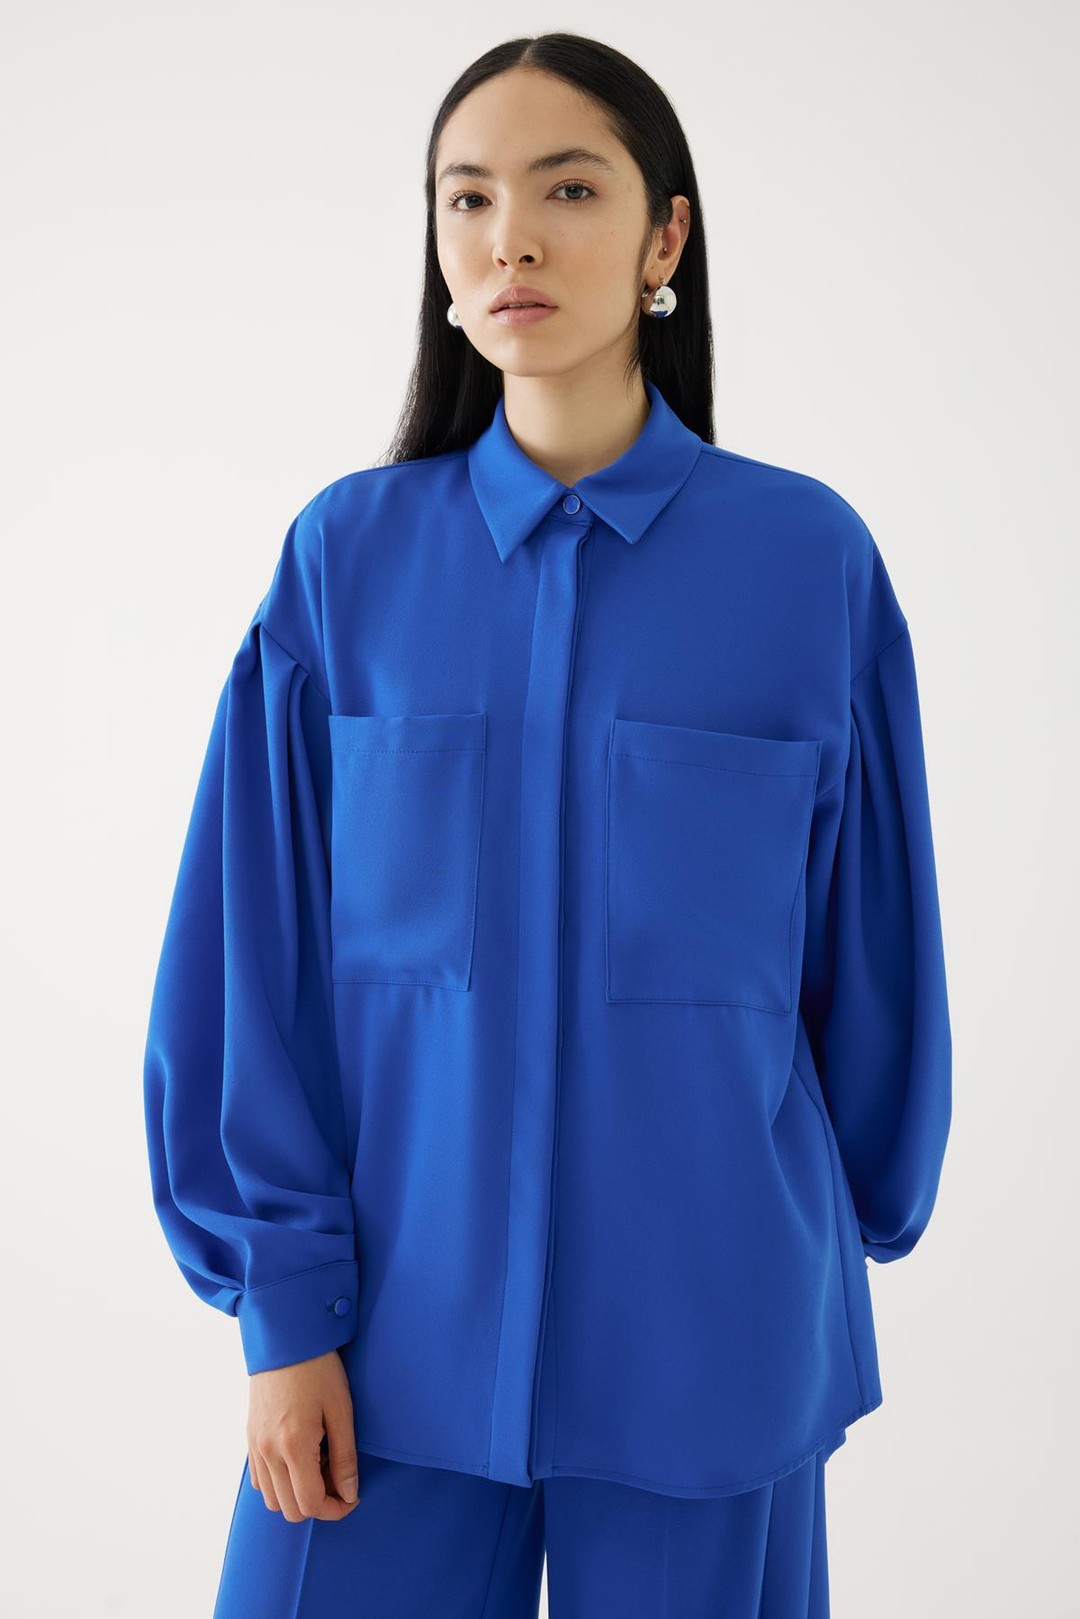 Saxe Blue Shirt 1